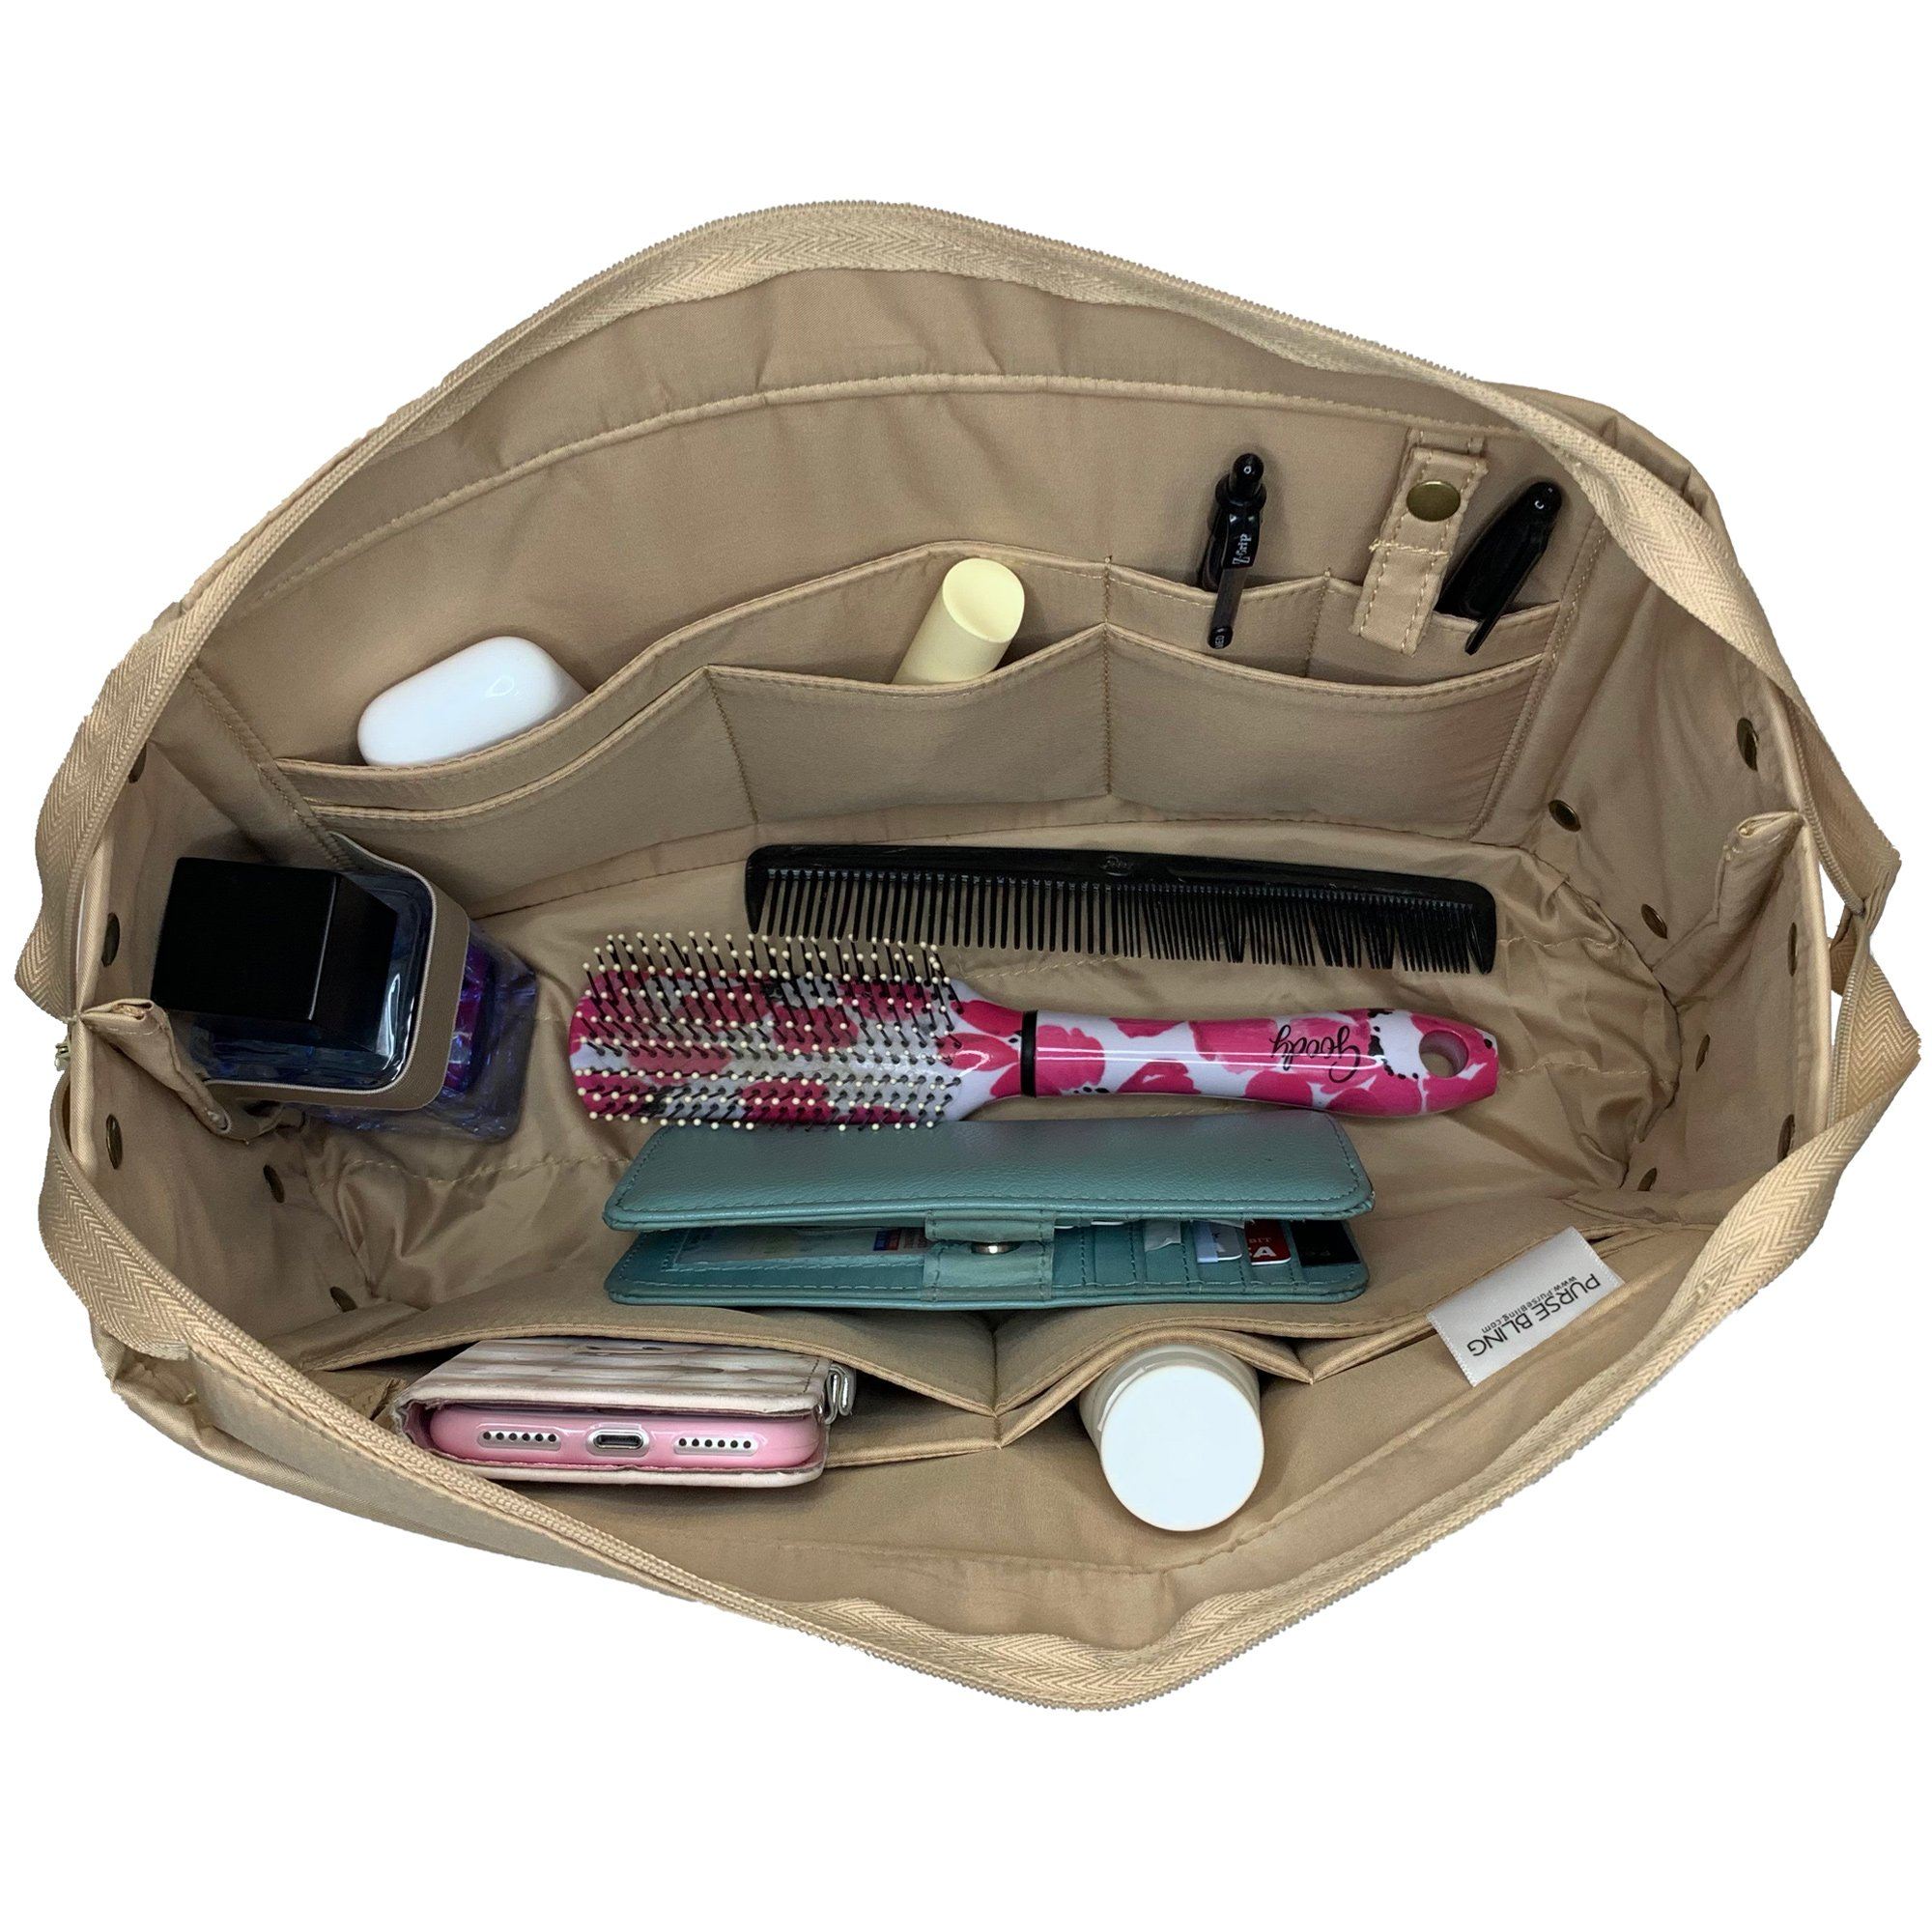 Purse Organizer Insert, Satin Bag organizer with zipper, Handbag